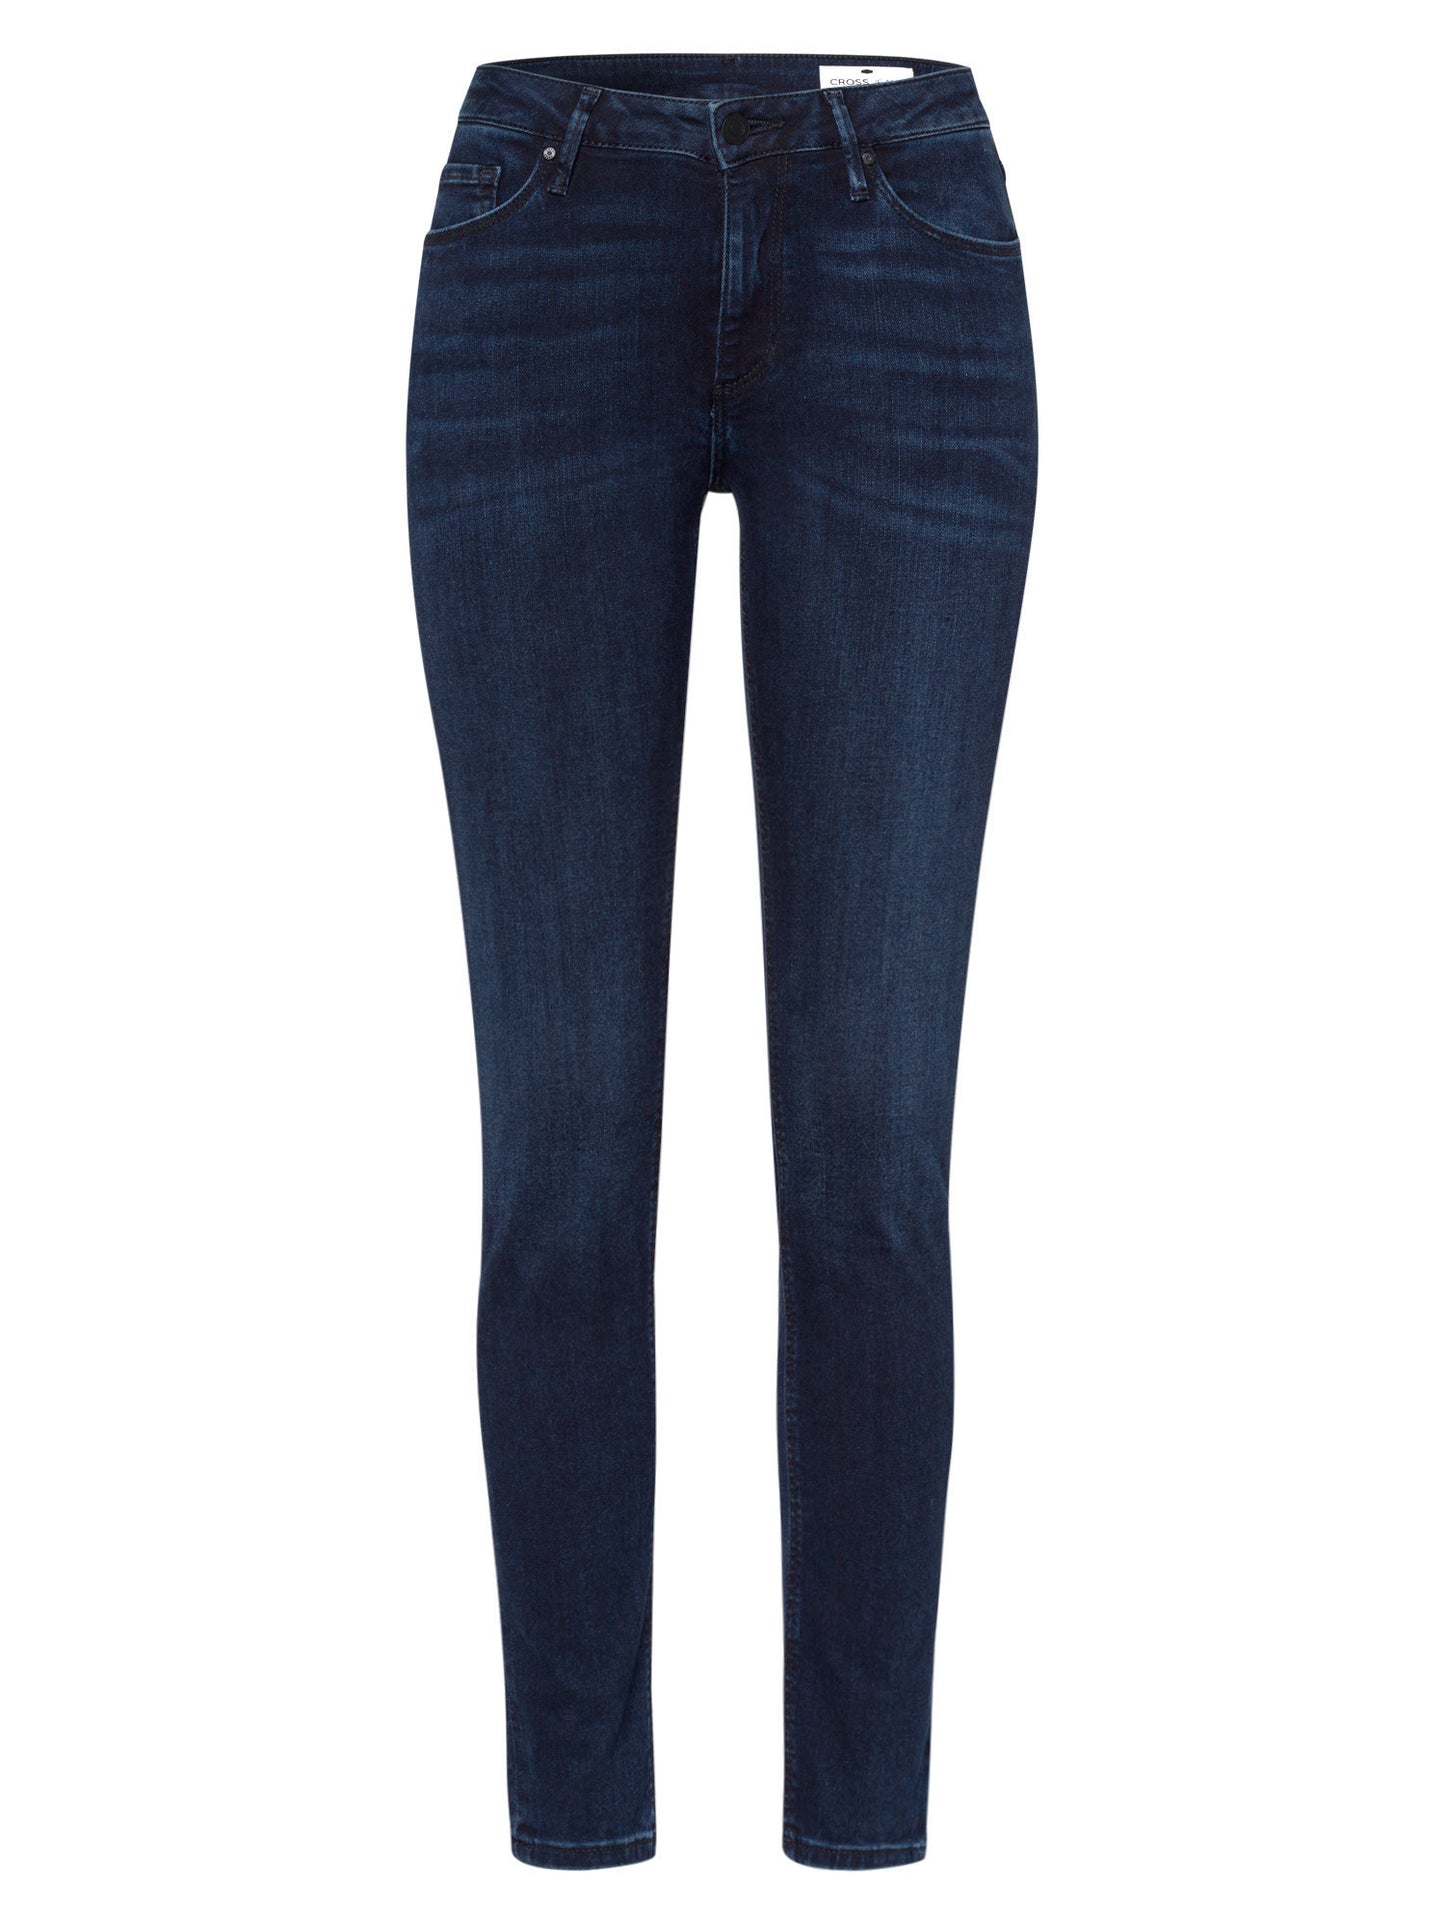 Alan women's jeans skinny fit high waist black-blue